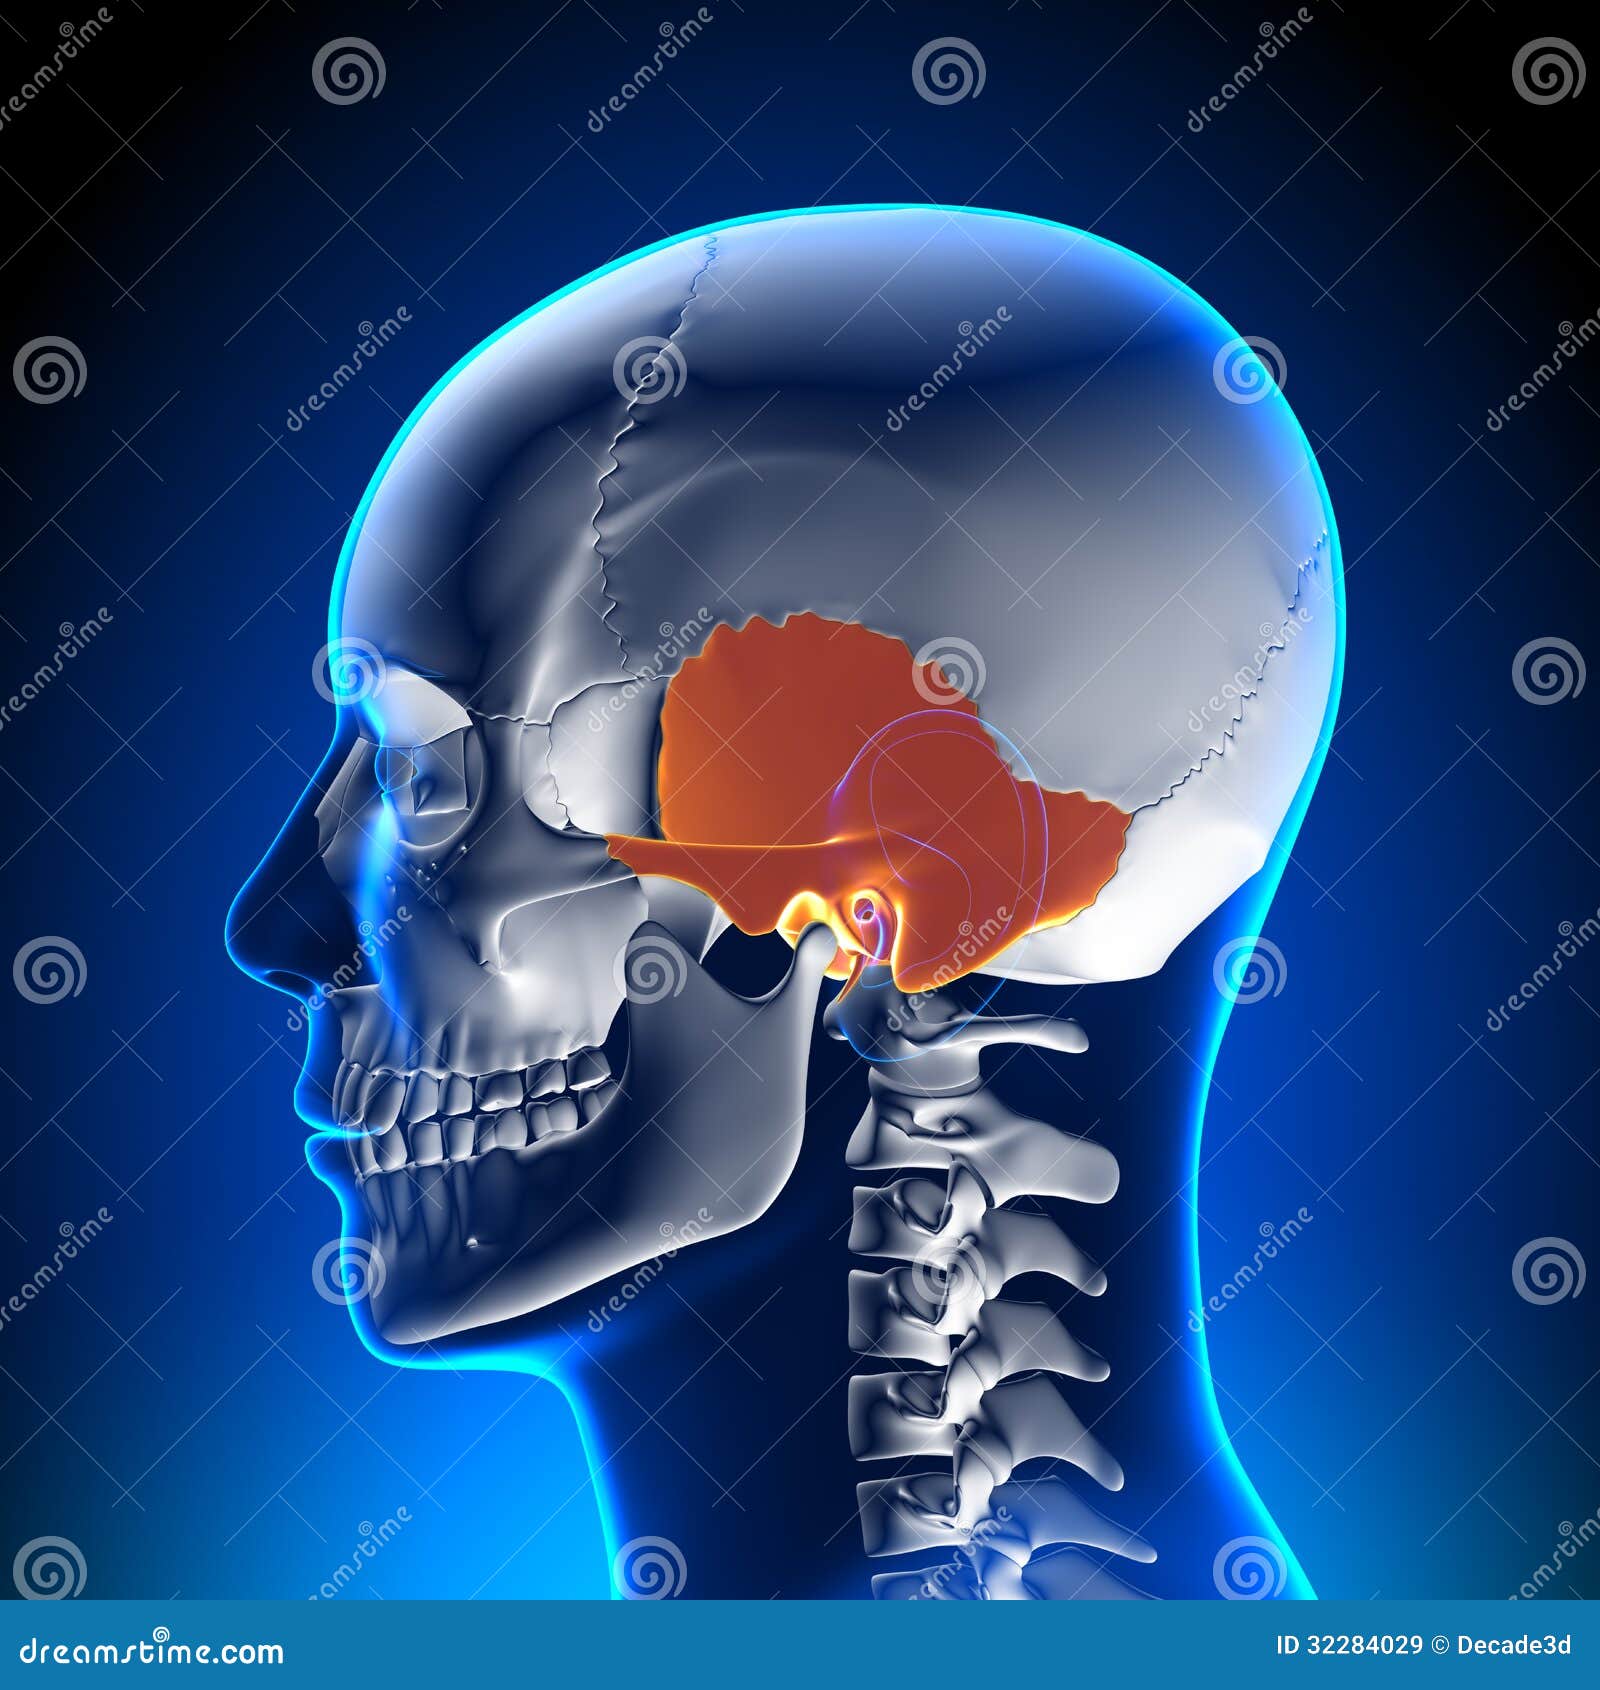 brain anatomy - temporal bone